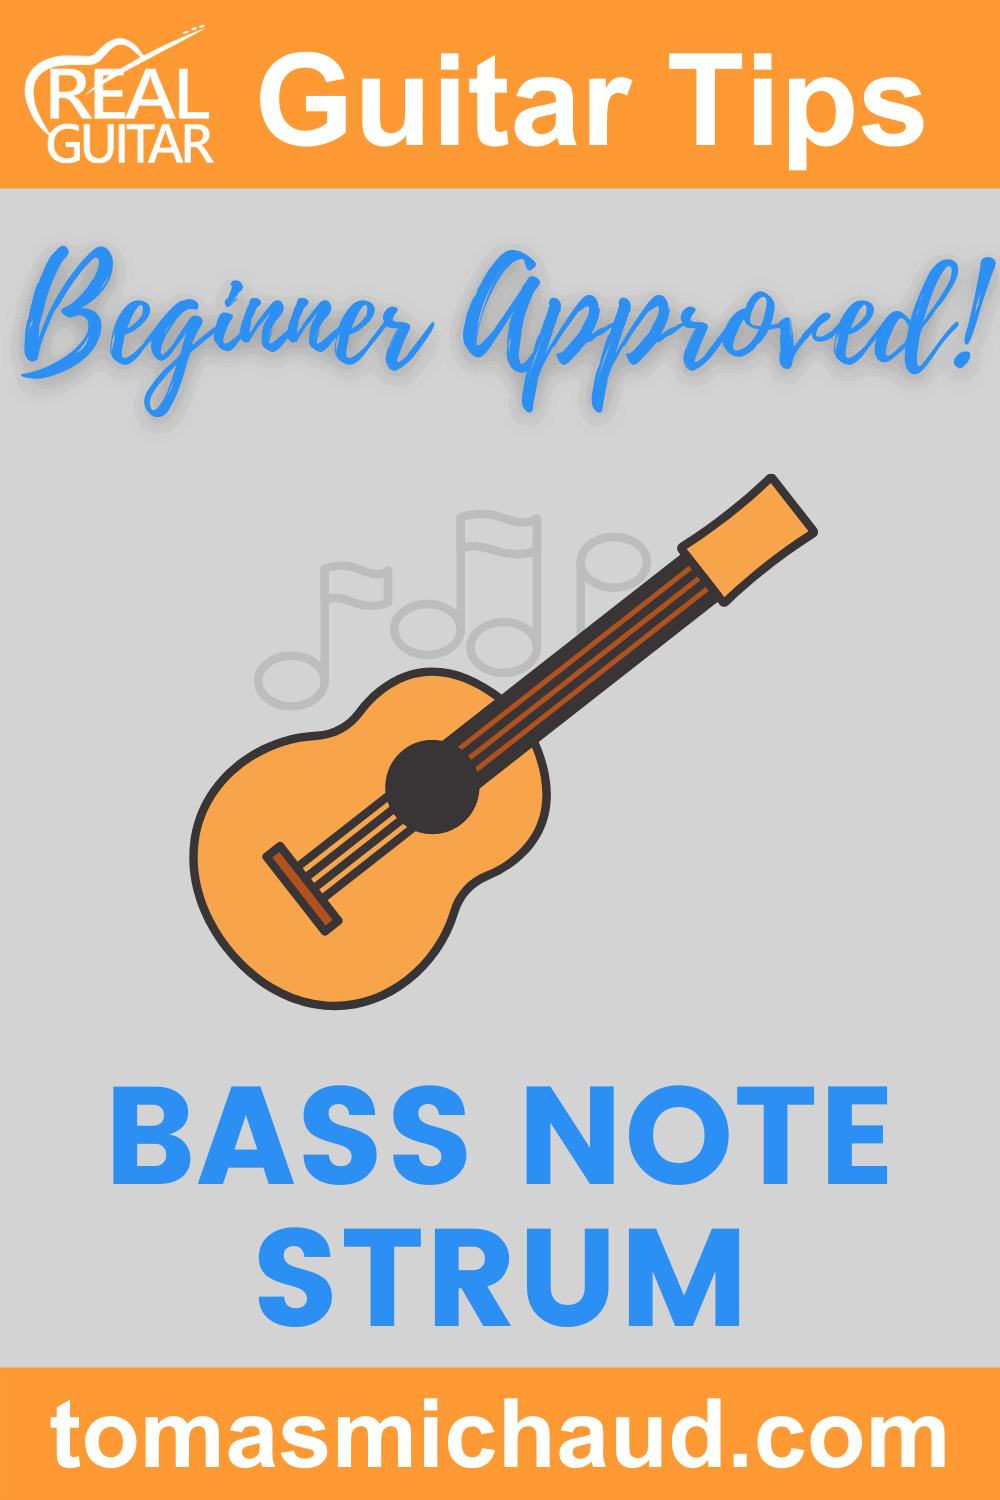 Beginner Approved! Bass Note Strum